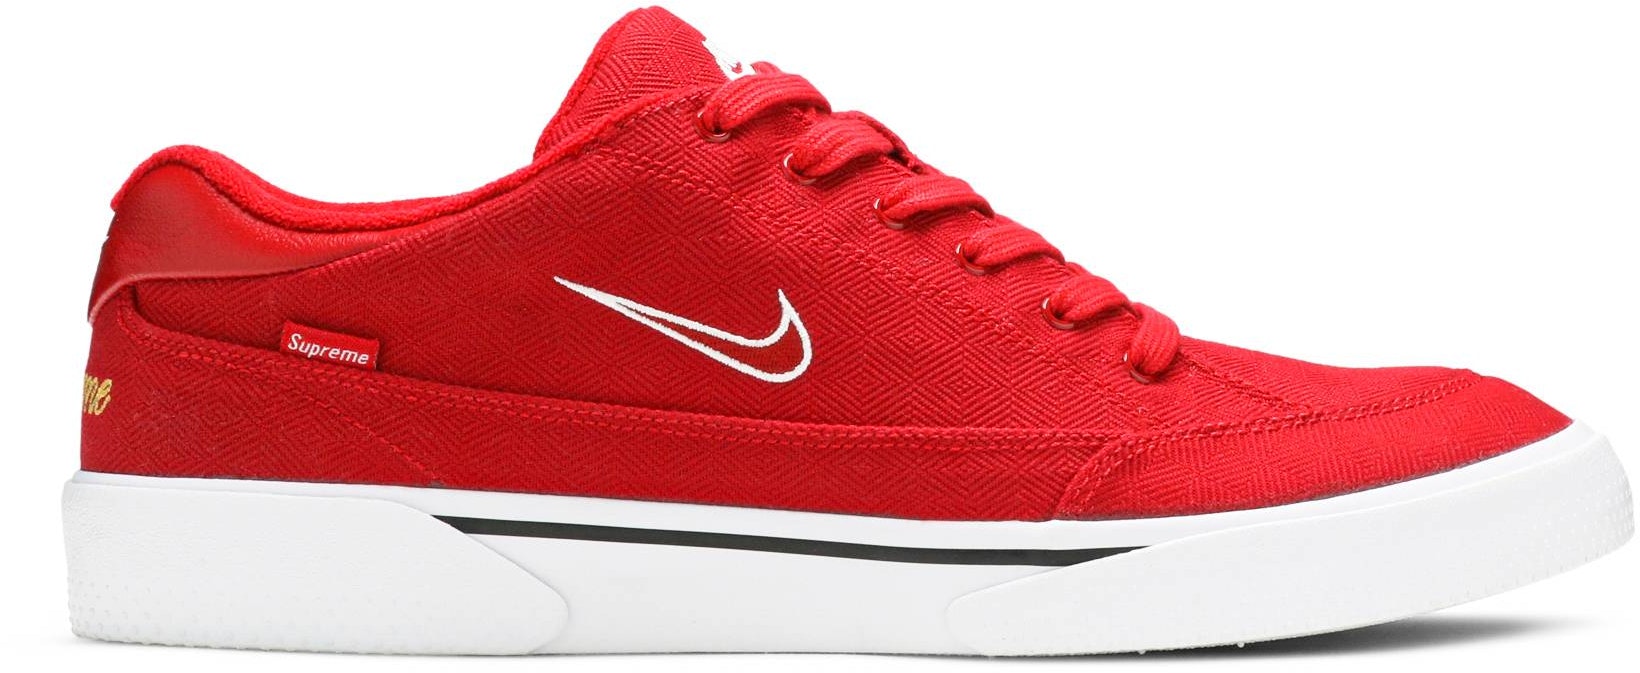 Supreme x Nike SB GTS QS 'Gym Red' 801621‑661 - 801621-661 - Novelship